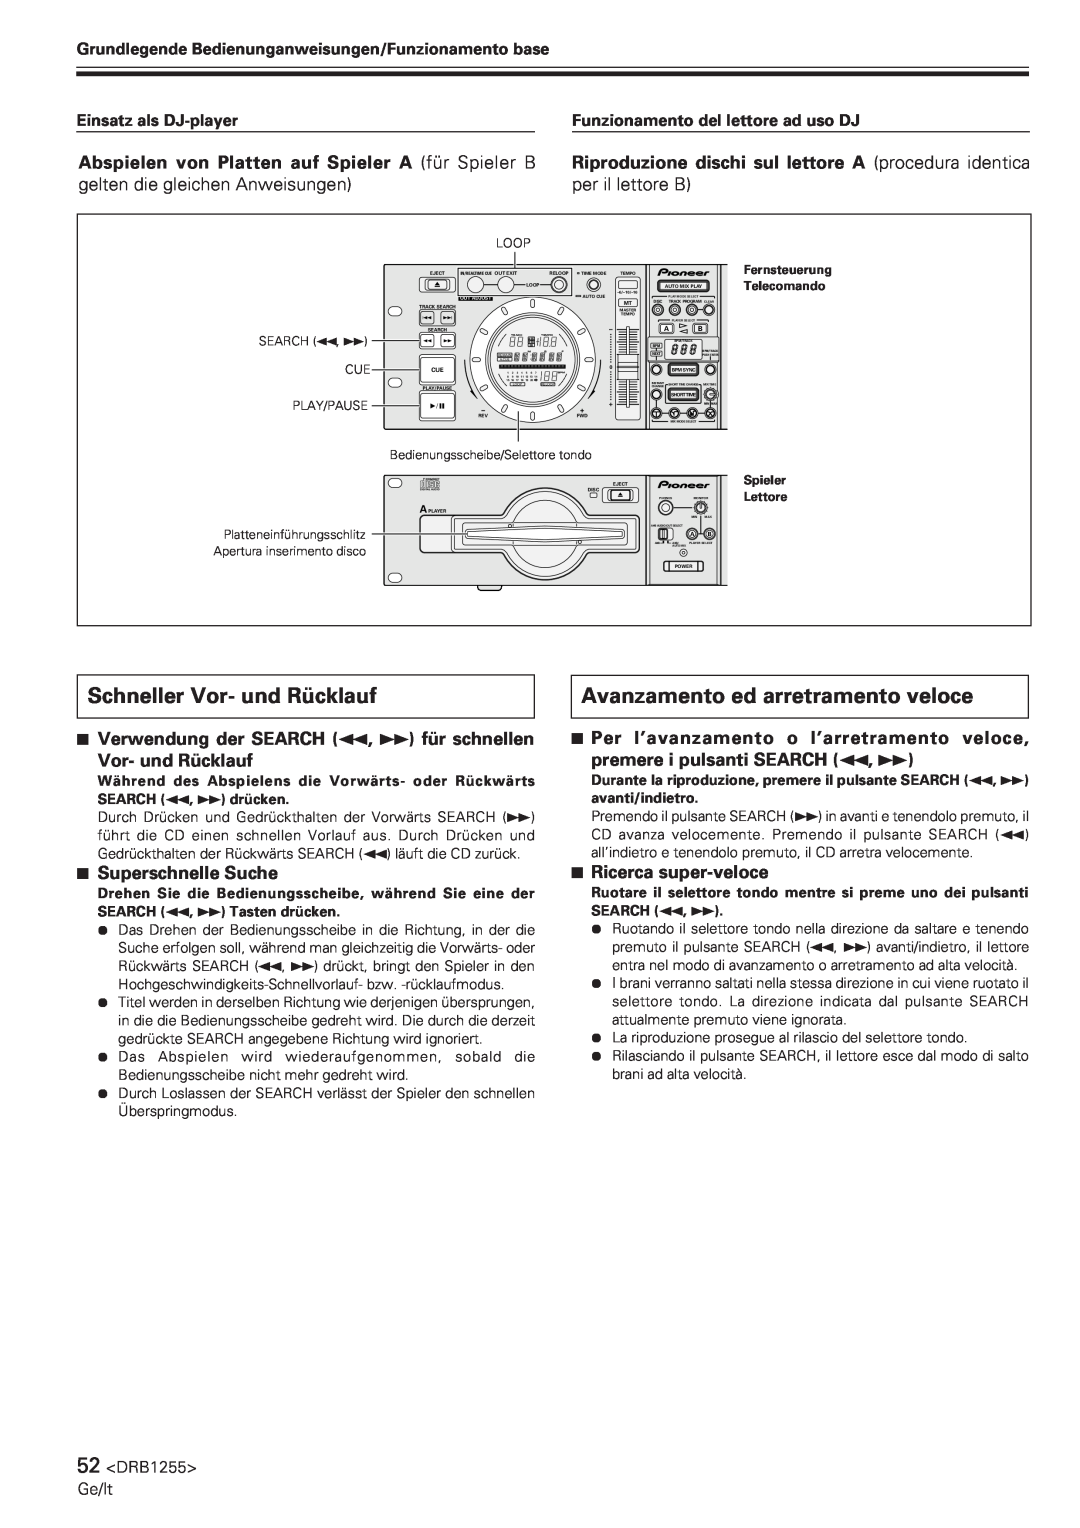 Pioneer CMX-5000 manual Schneller Vor- und Rücklauf, Avanzamento ed arretramento veloce, premere i pulsanti SEARCH 1, Á 